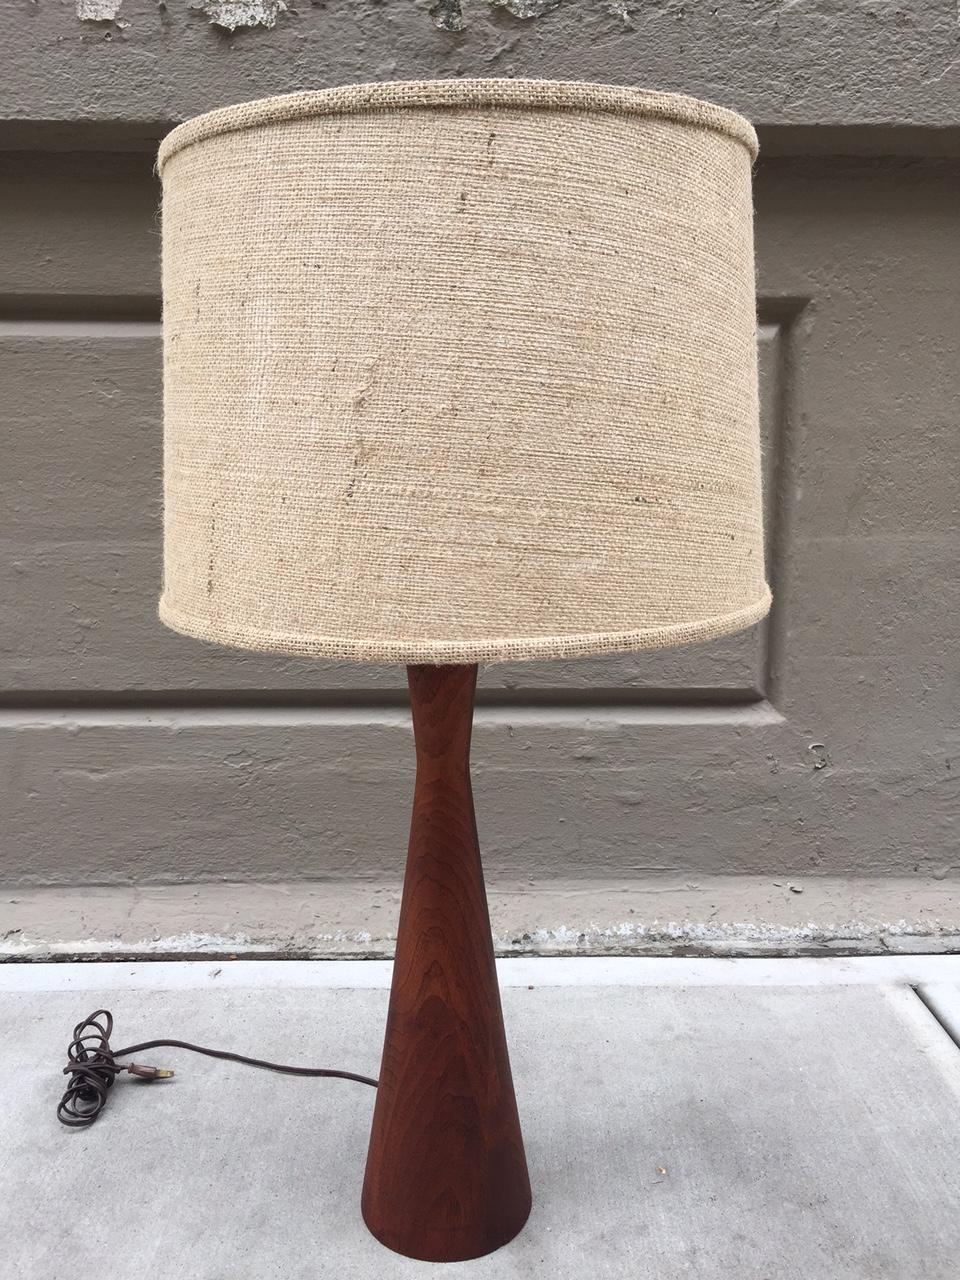 Danish modern walnut lamp.
Measures:  31H (top of finial).  Base: 5.5 in diameter.
Shade not included.